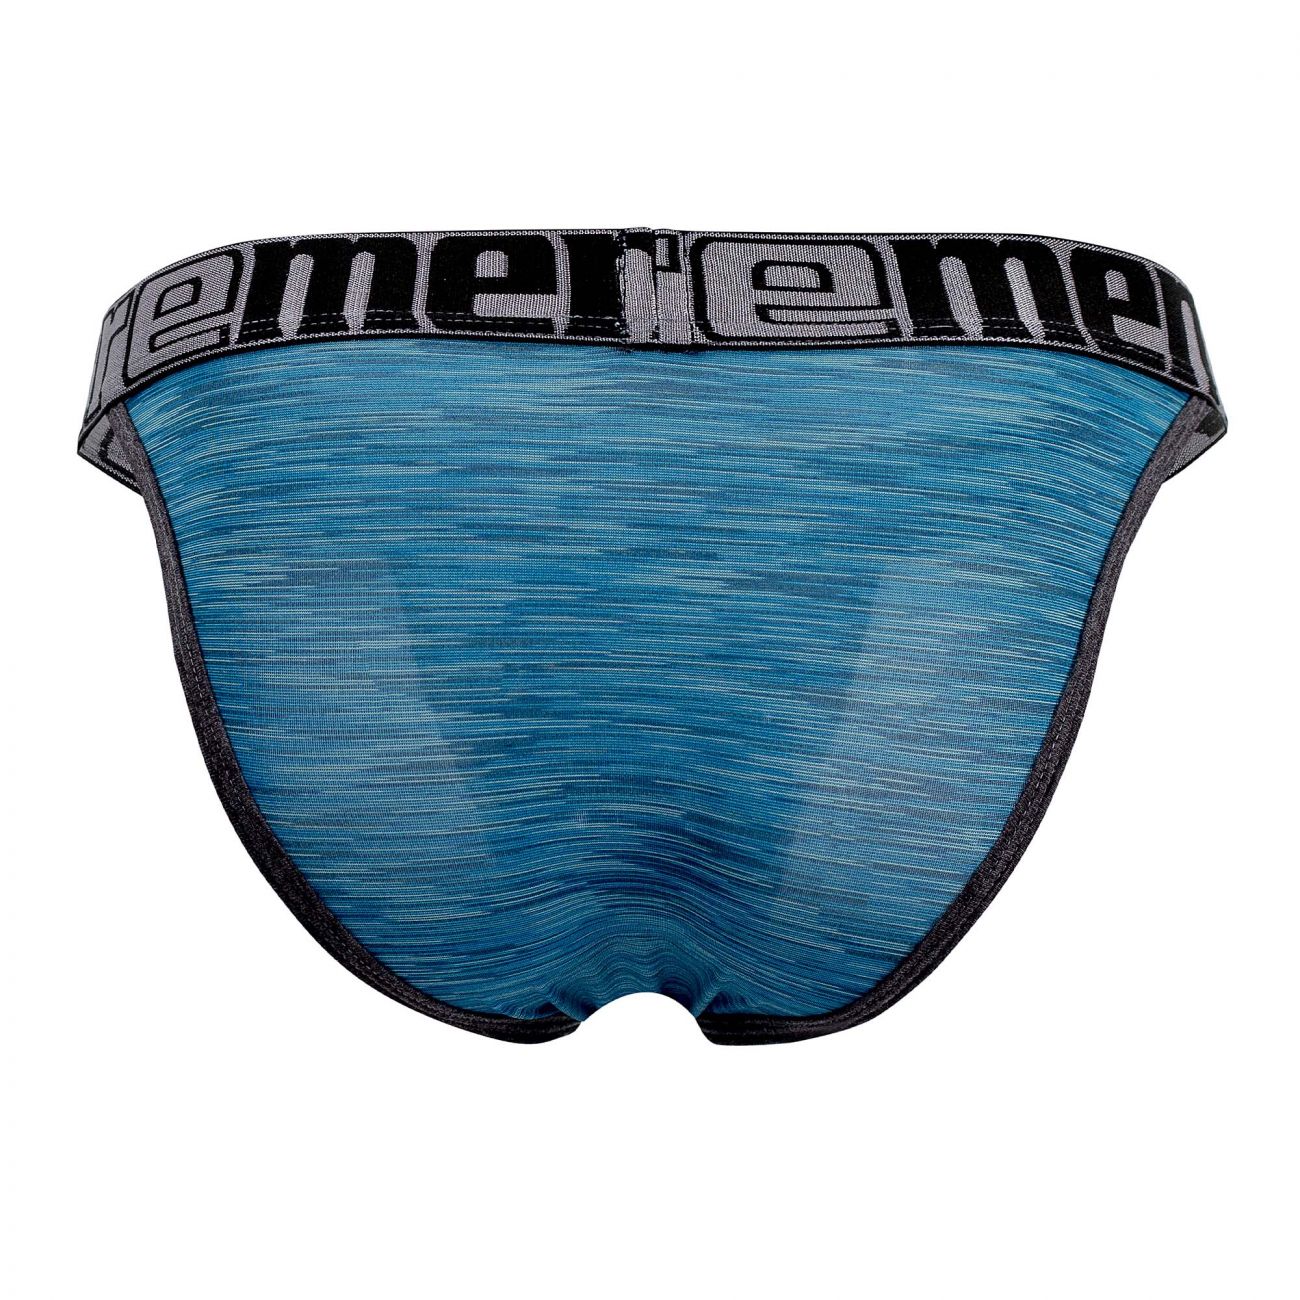 Xtremen 91070 Microfiber Bikini Petrol